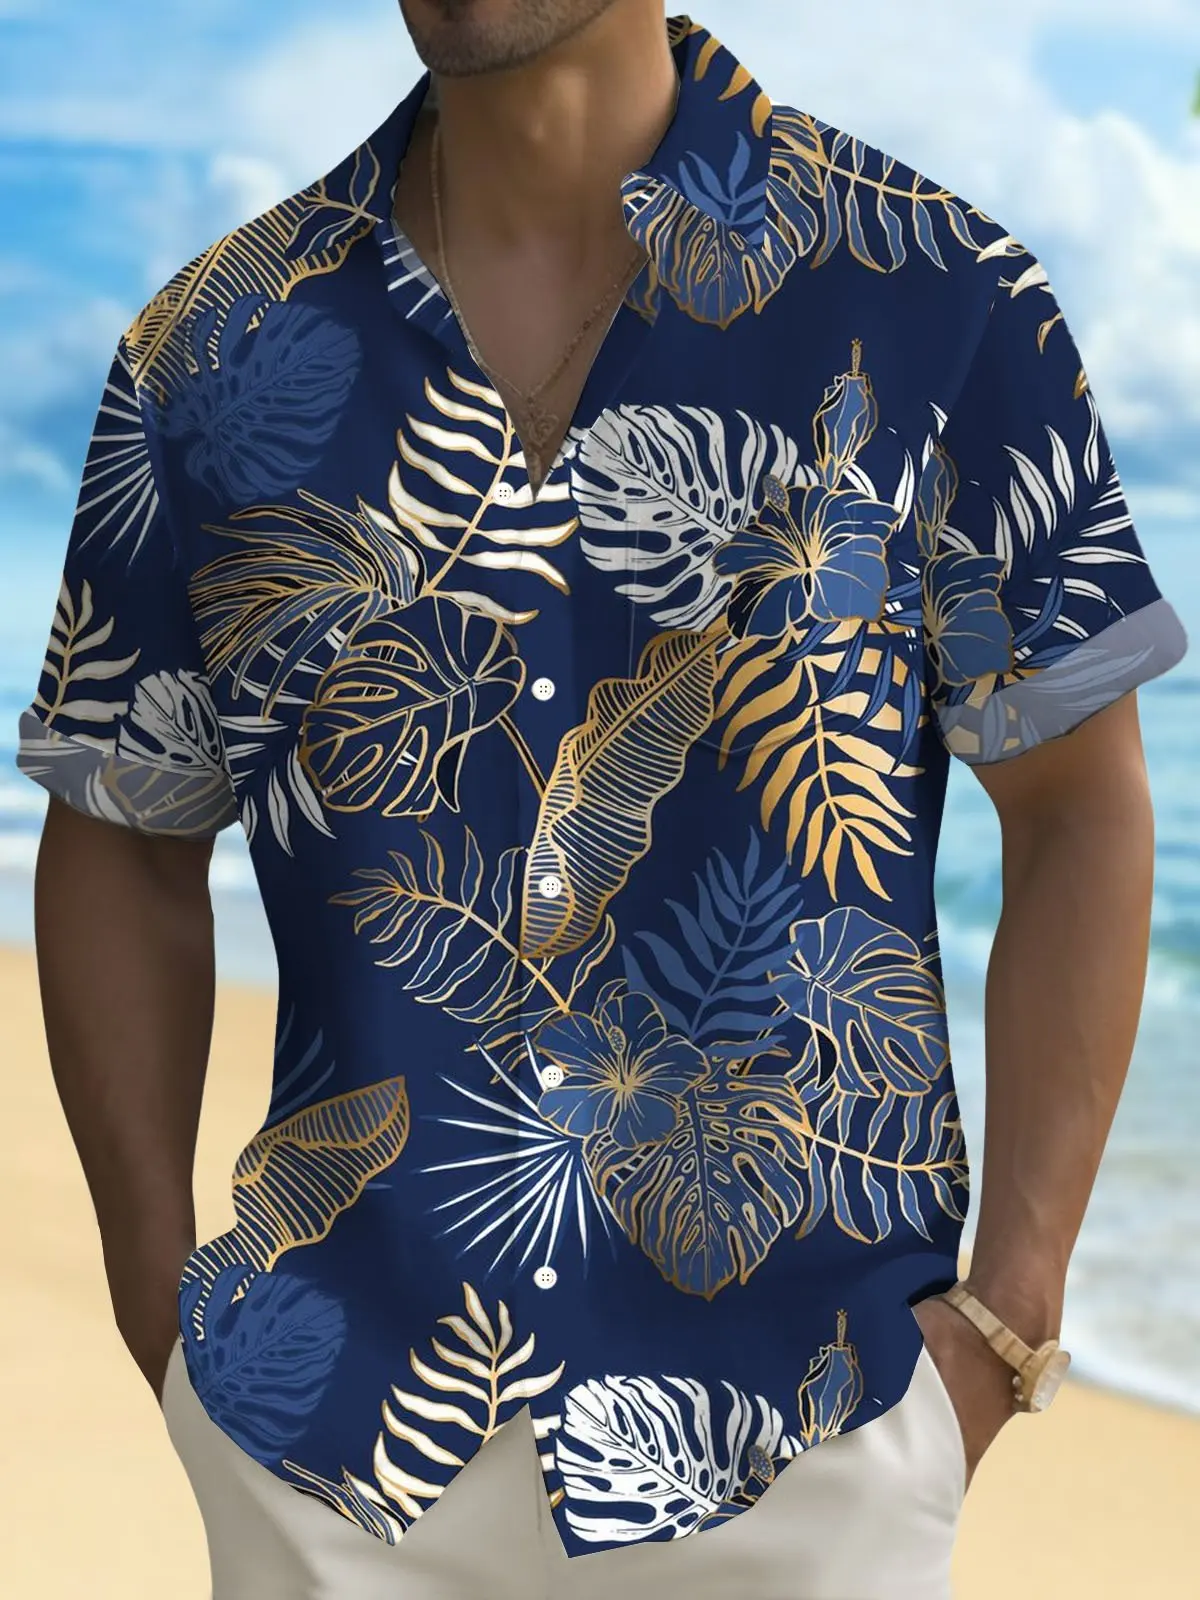 

Hawaiian Plant Golden Leaves 3D Print Men's hawaiian Shirt Outdoor Street Casual Summer Turndown Short Sleeve Polyester Shirt